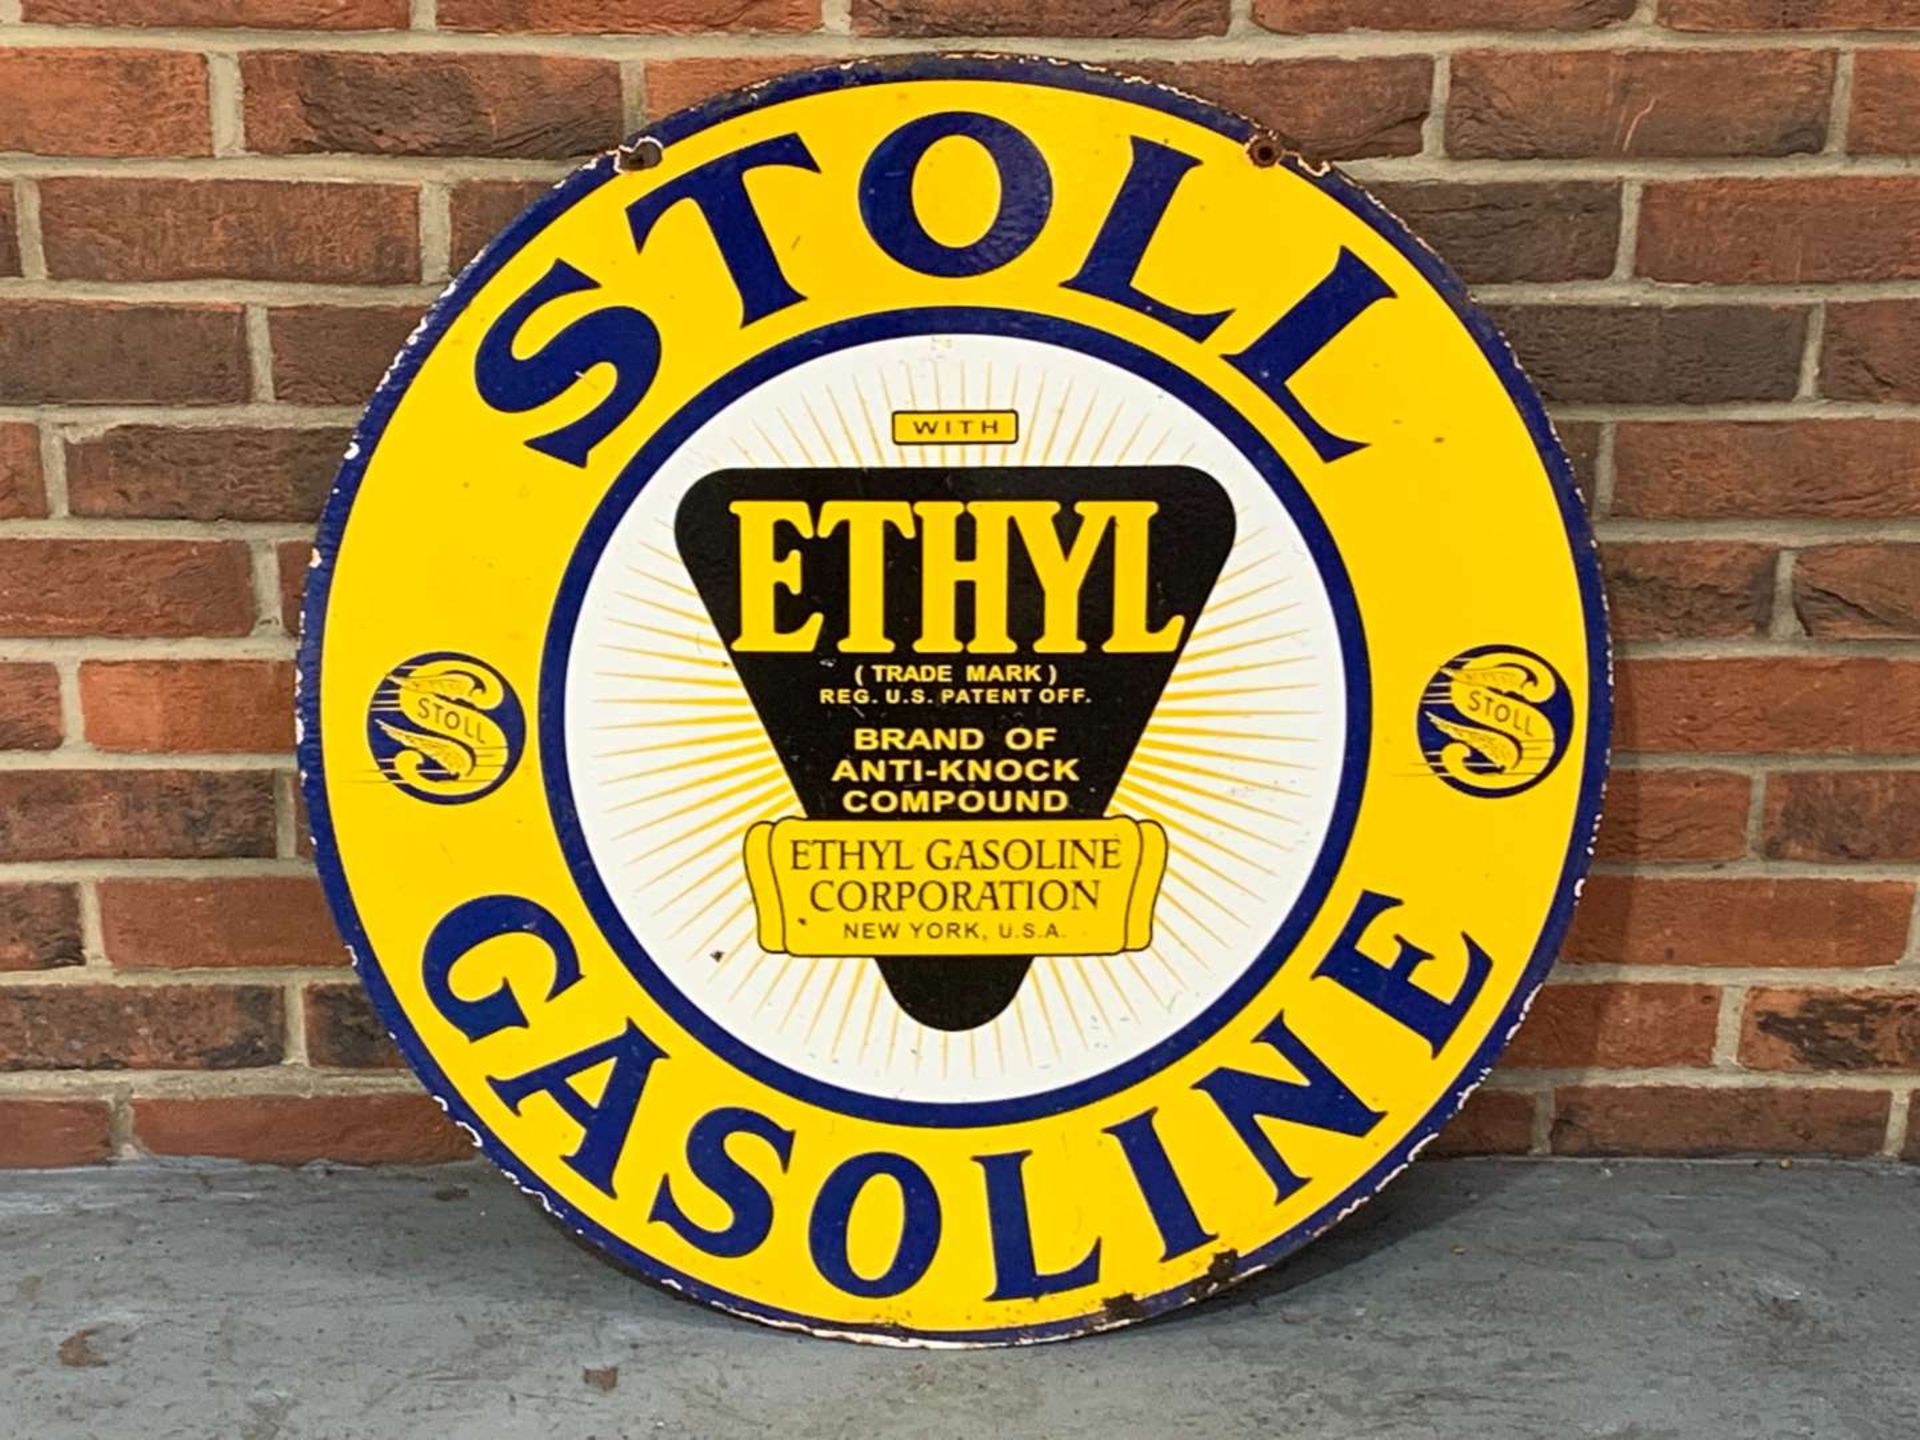 Stoll Gasoline Circular Enamel Sign - Image 2 of 2